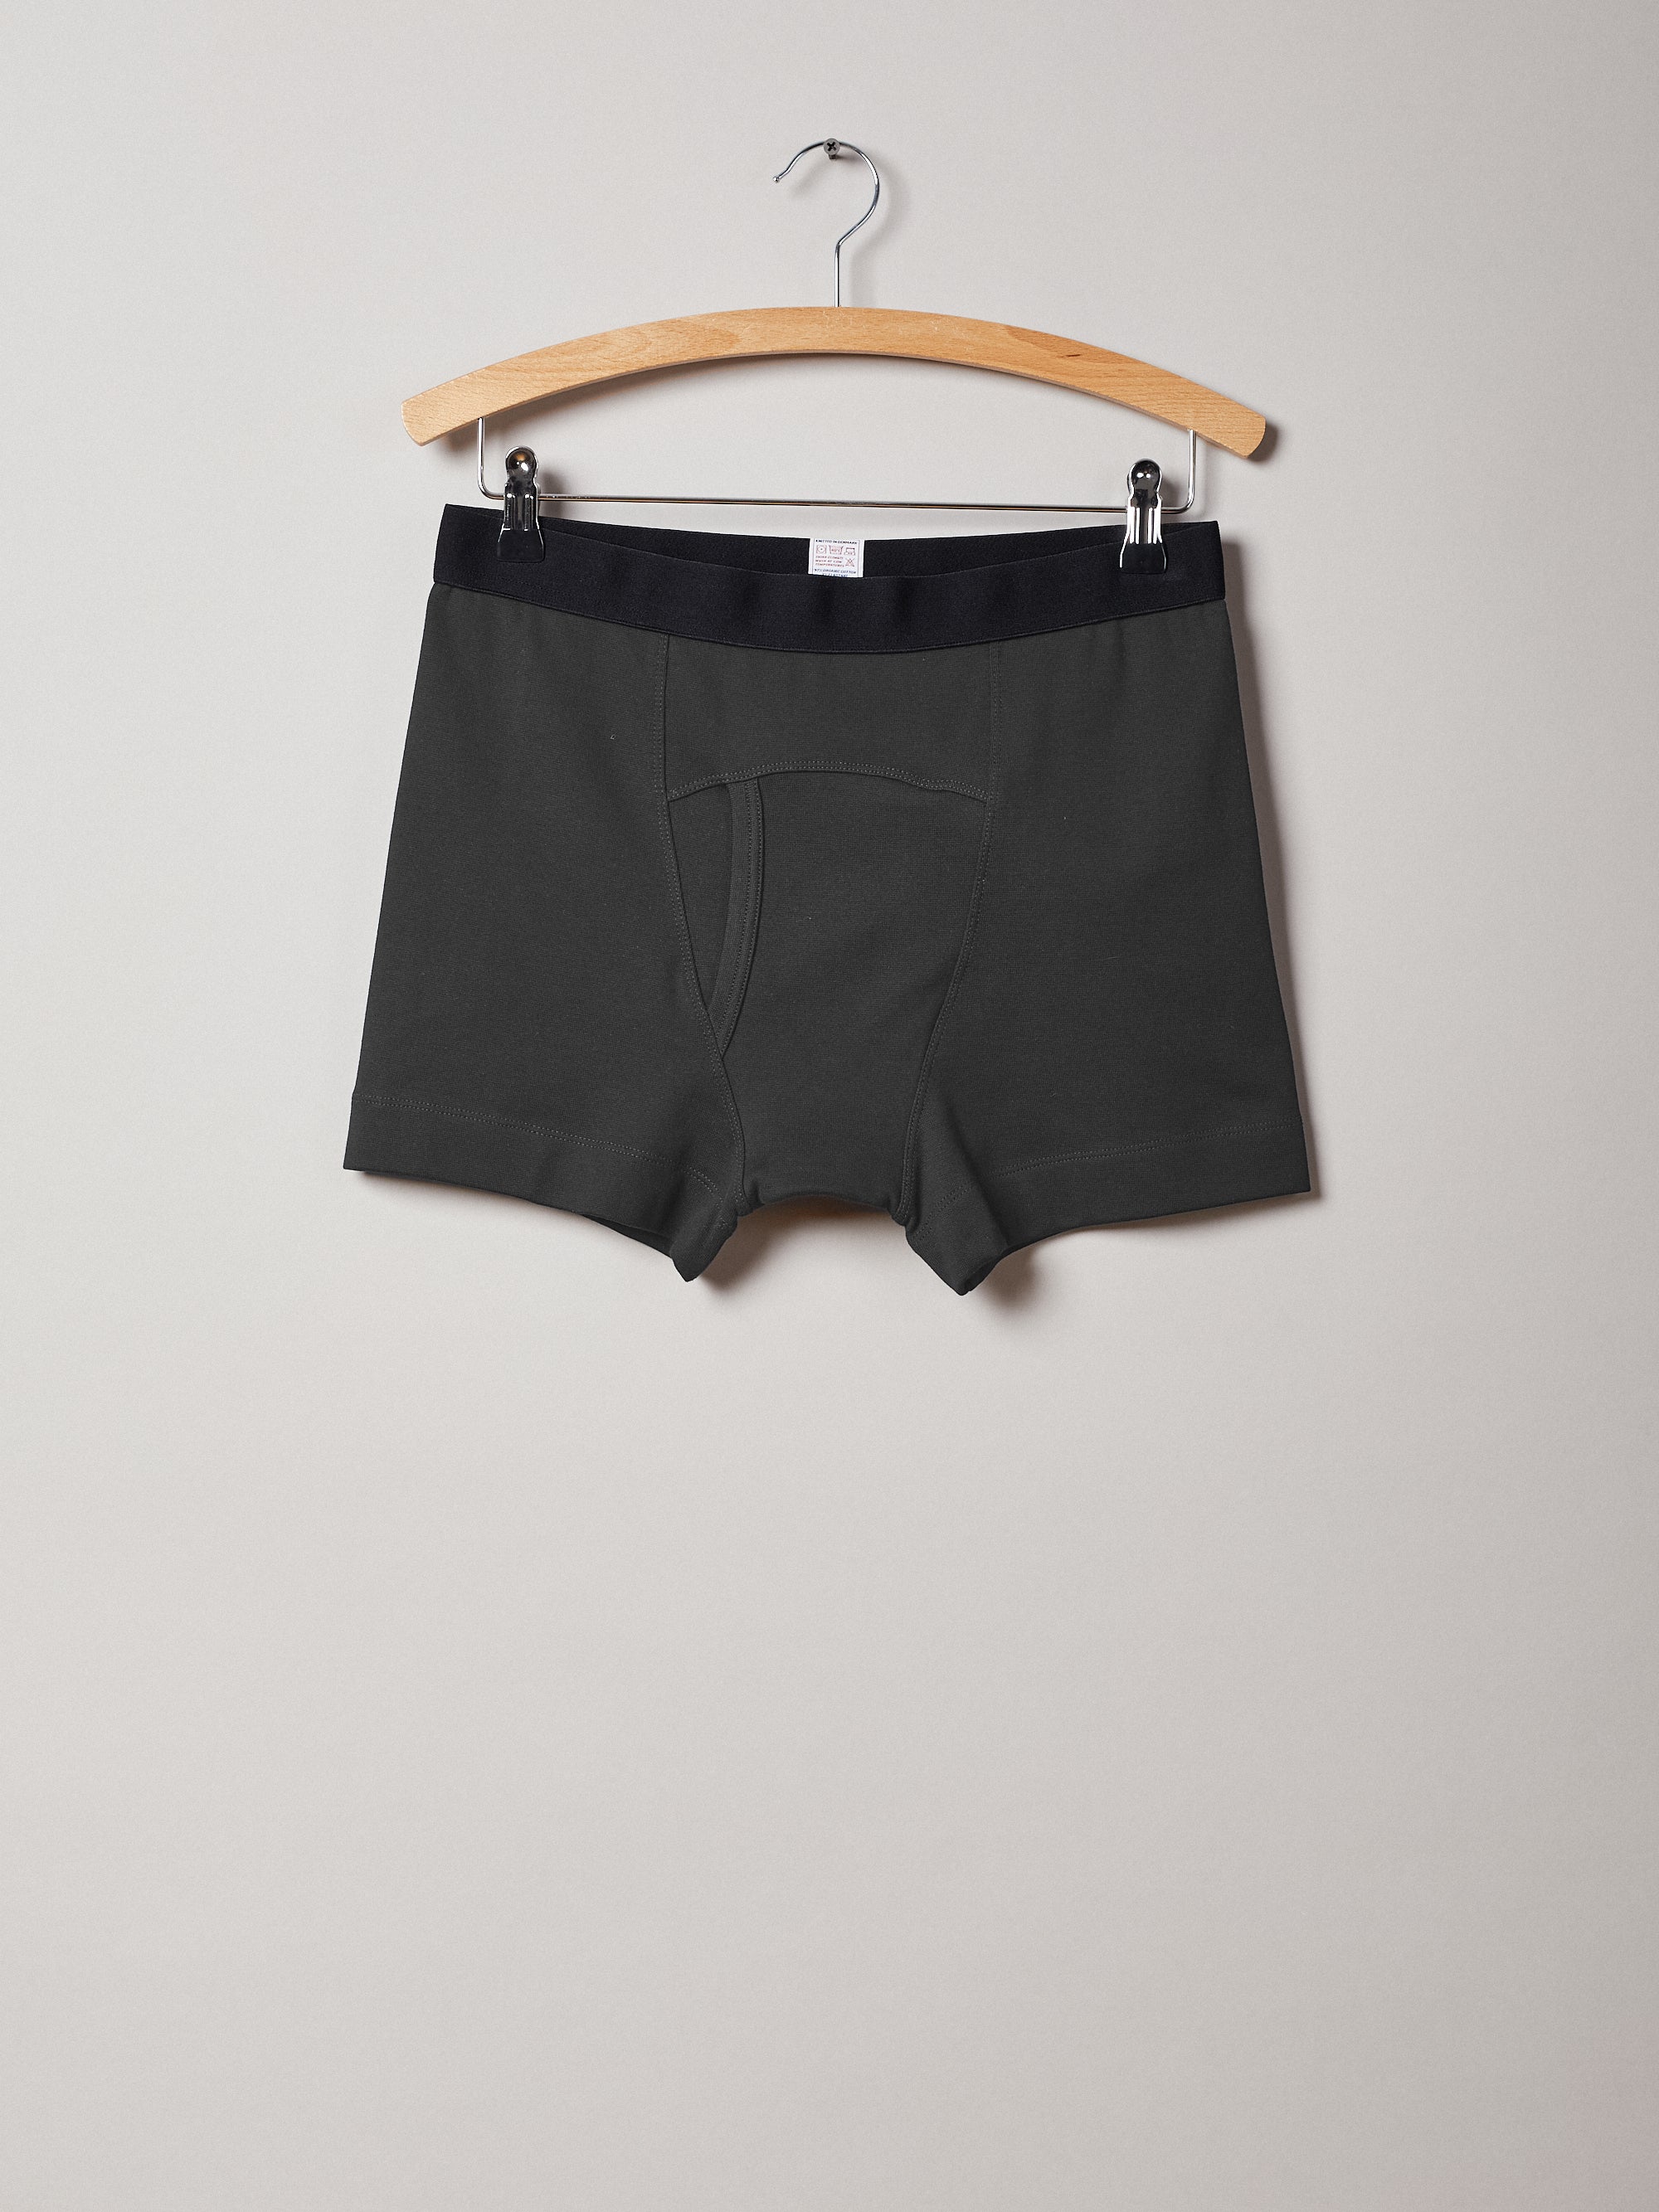 Long John Archives - Underwear Malta